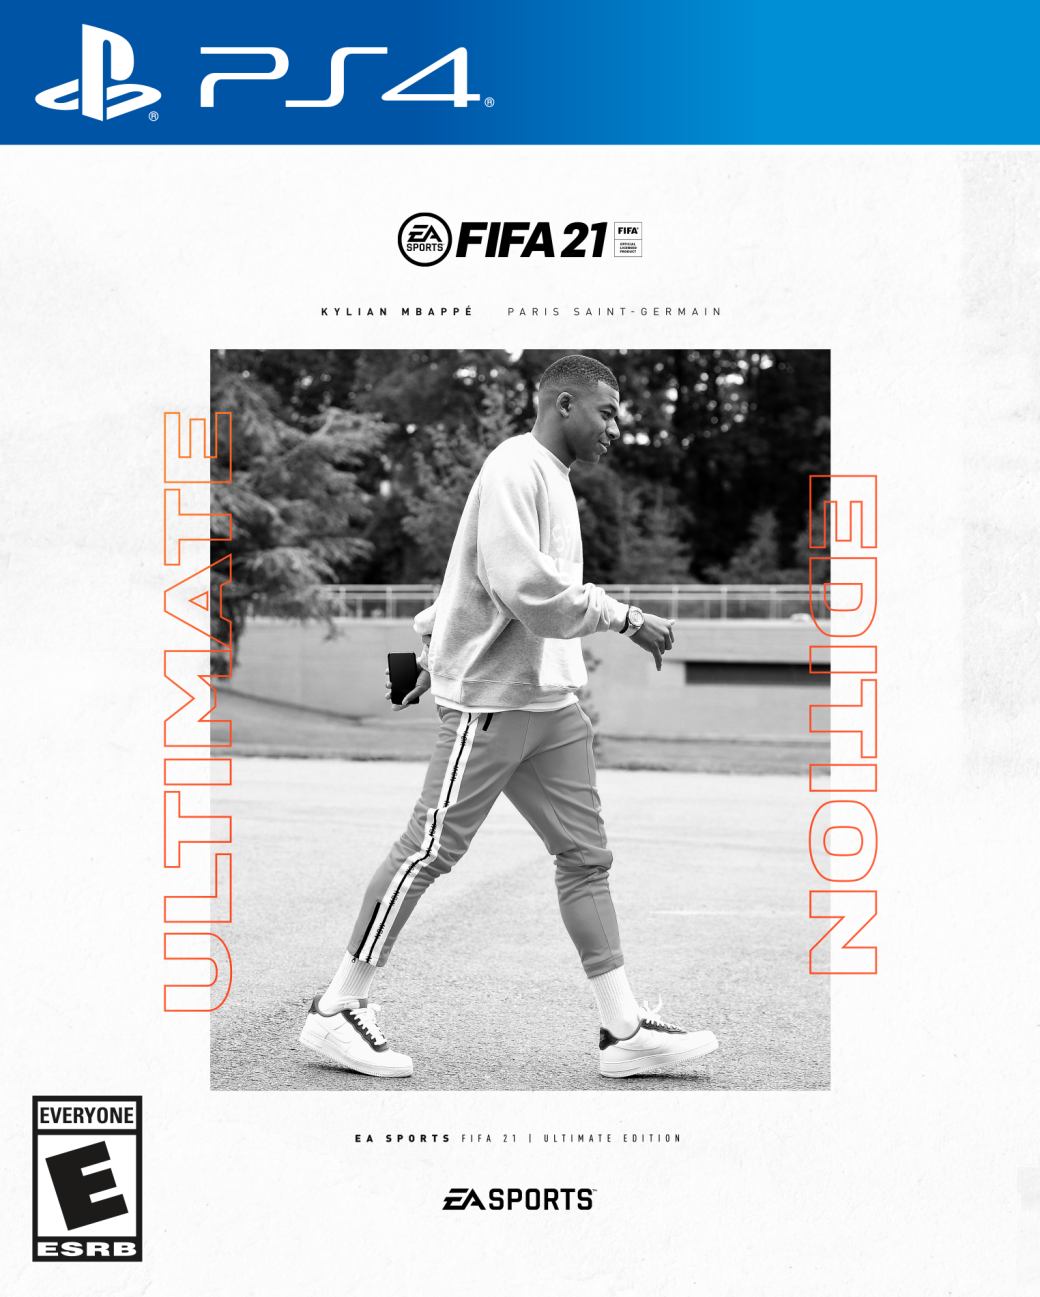 Галерея На обложке FIFA 21 появится Килиан Мбаппе из «Пари Сен-Жермен» - 3 фото